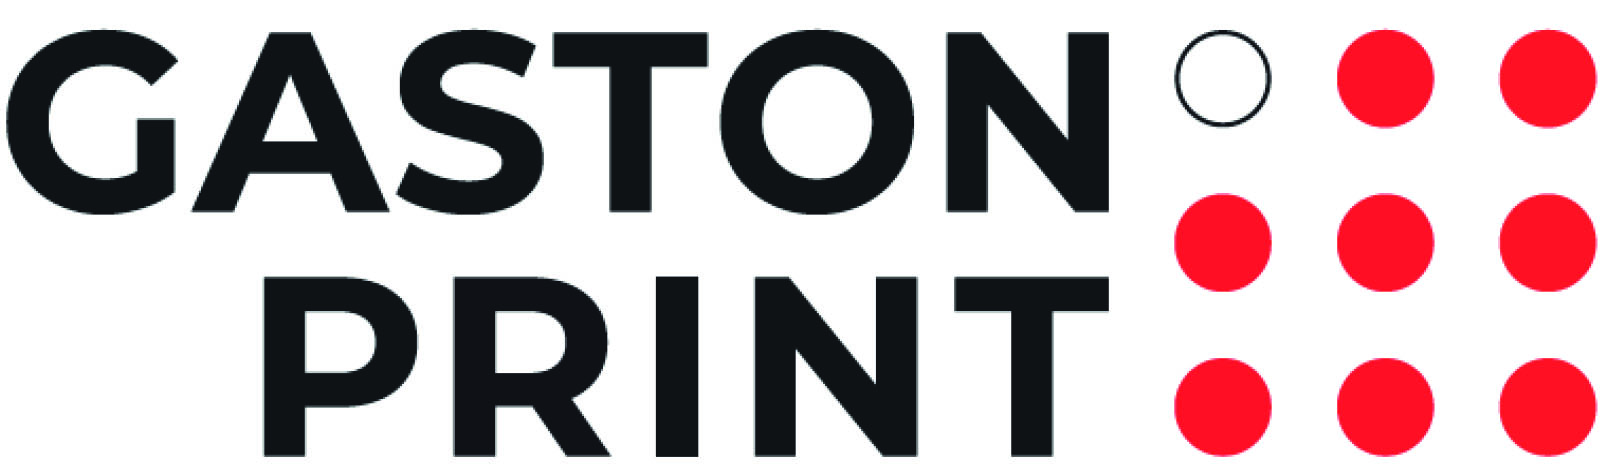 Gaston Print